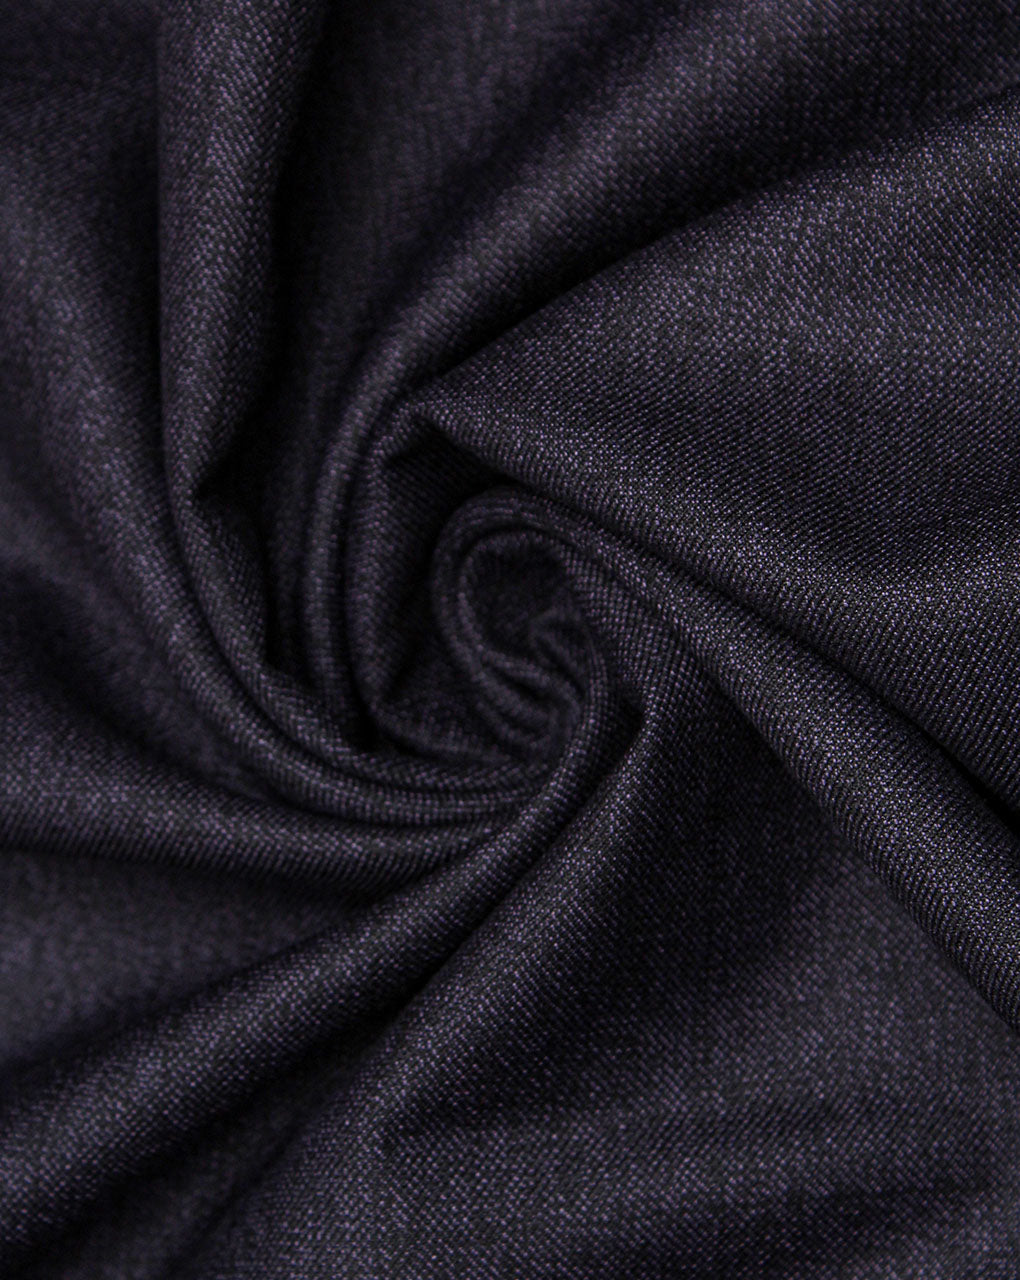 Black Plain Design 3 Woolen Suiting Fabric